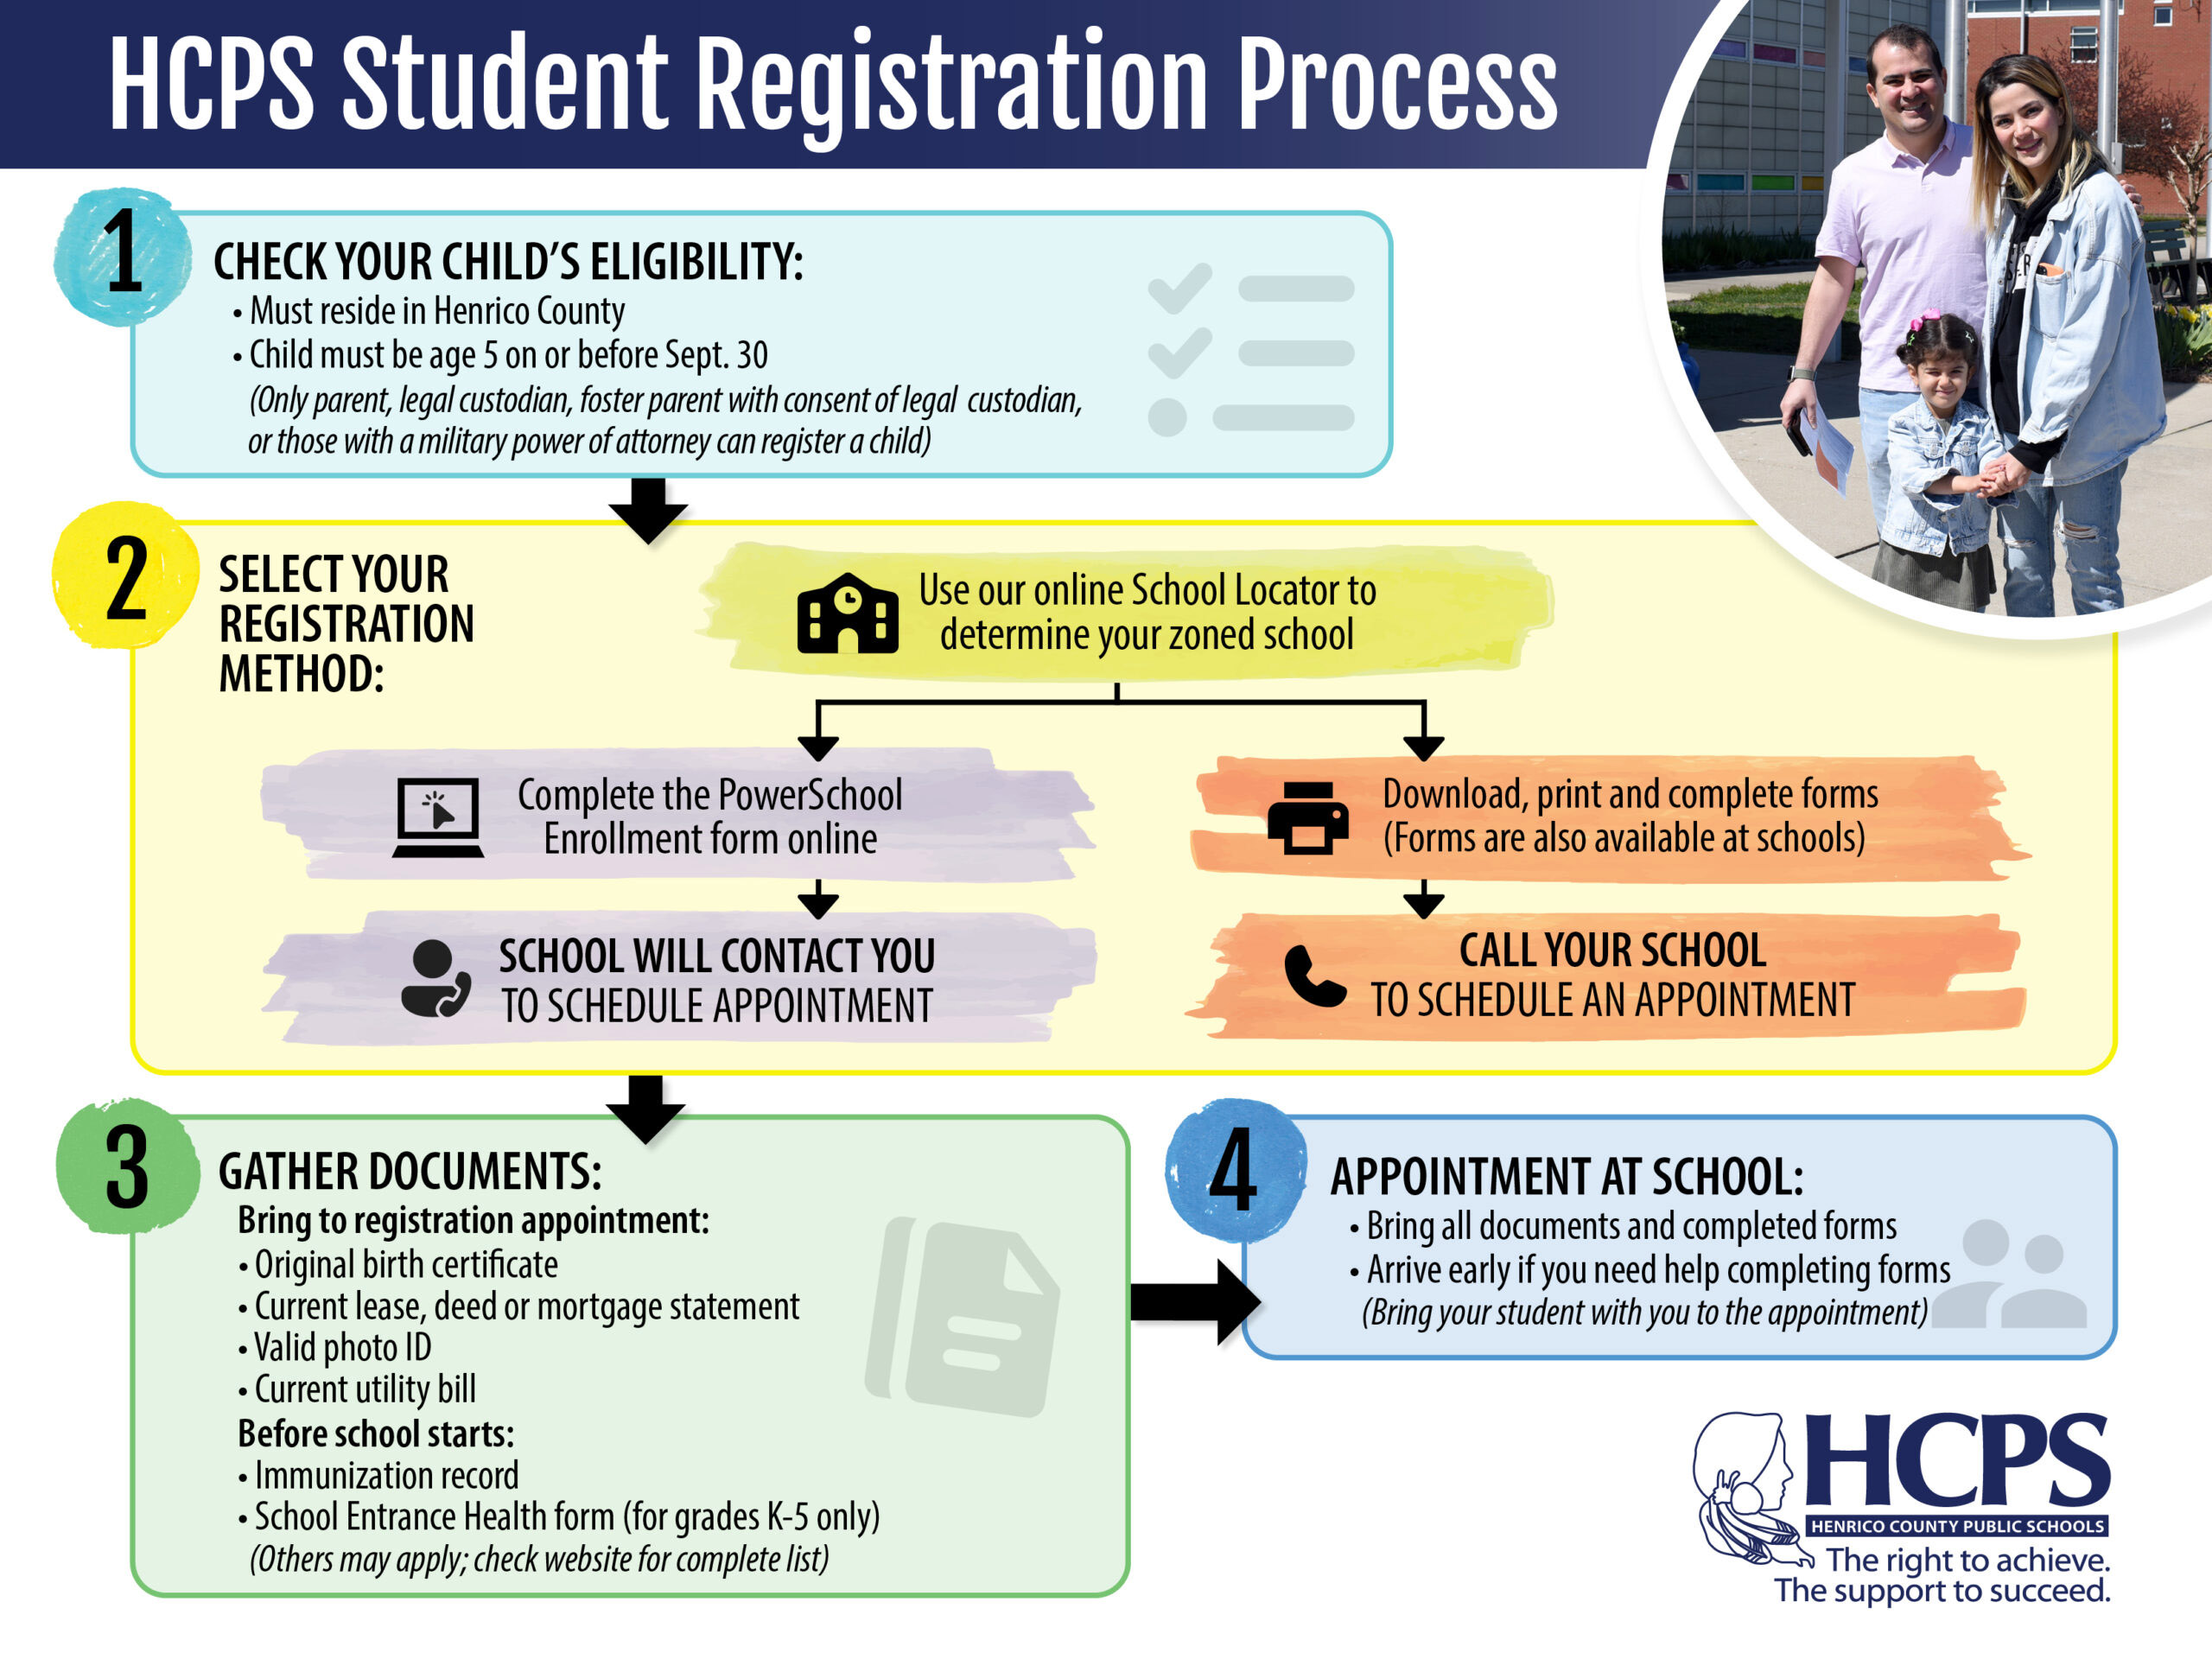 HCPS Student Registration Workflow